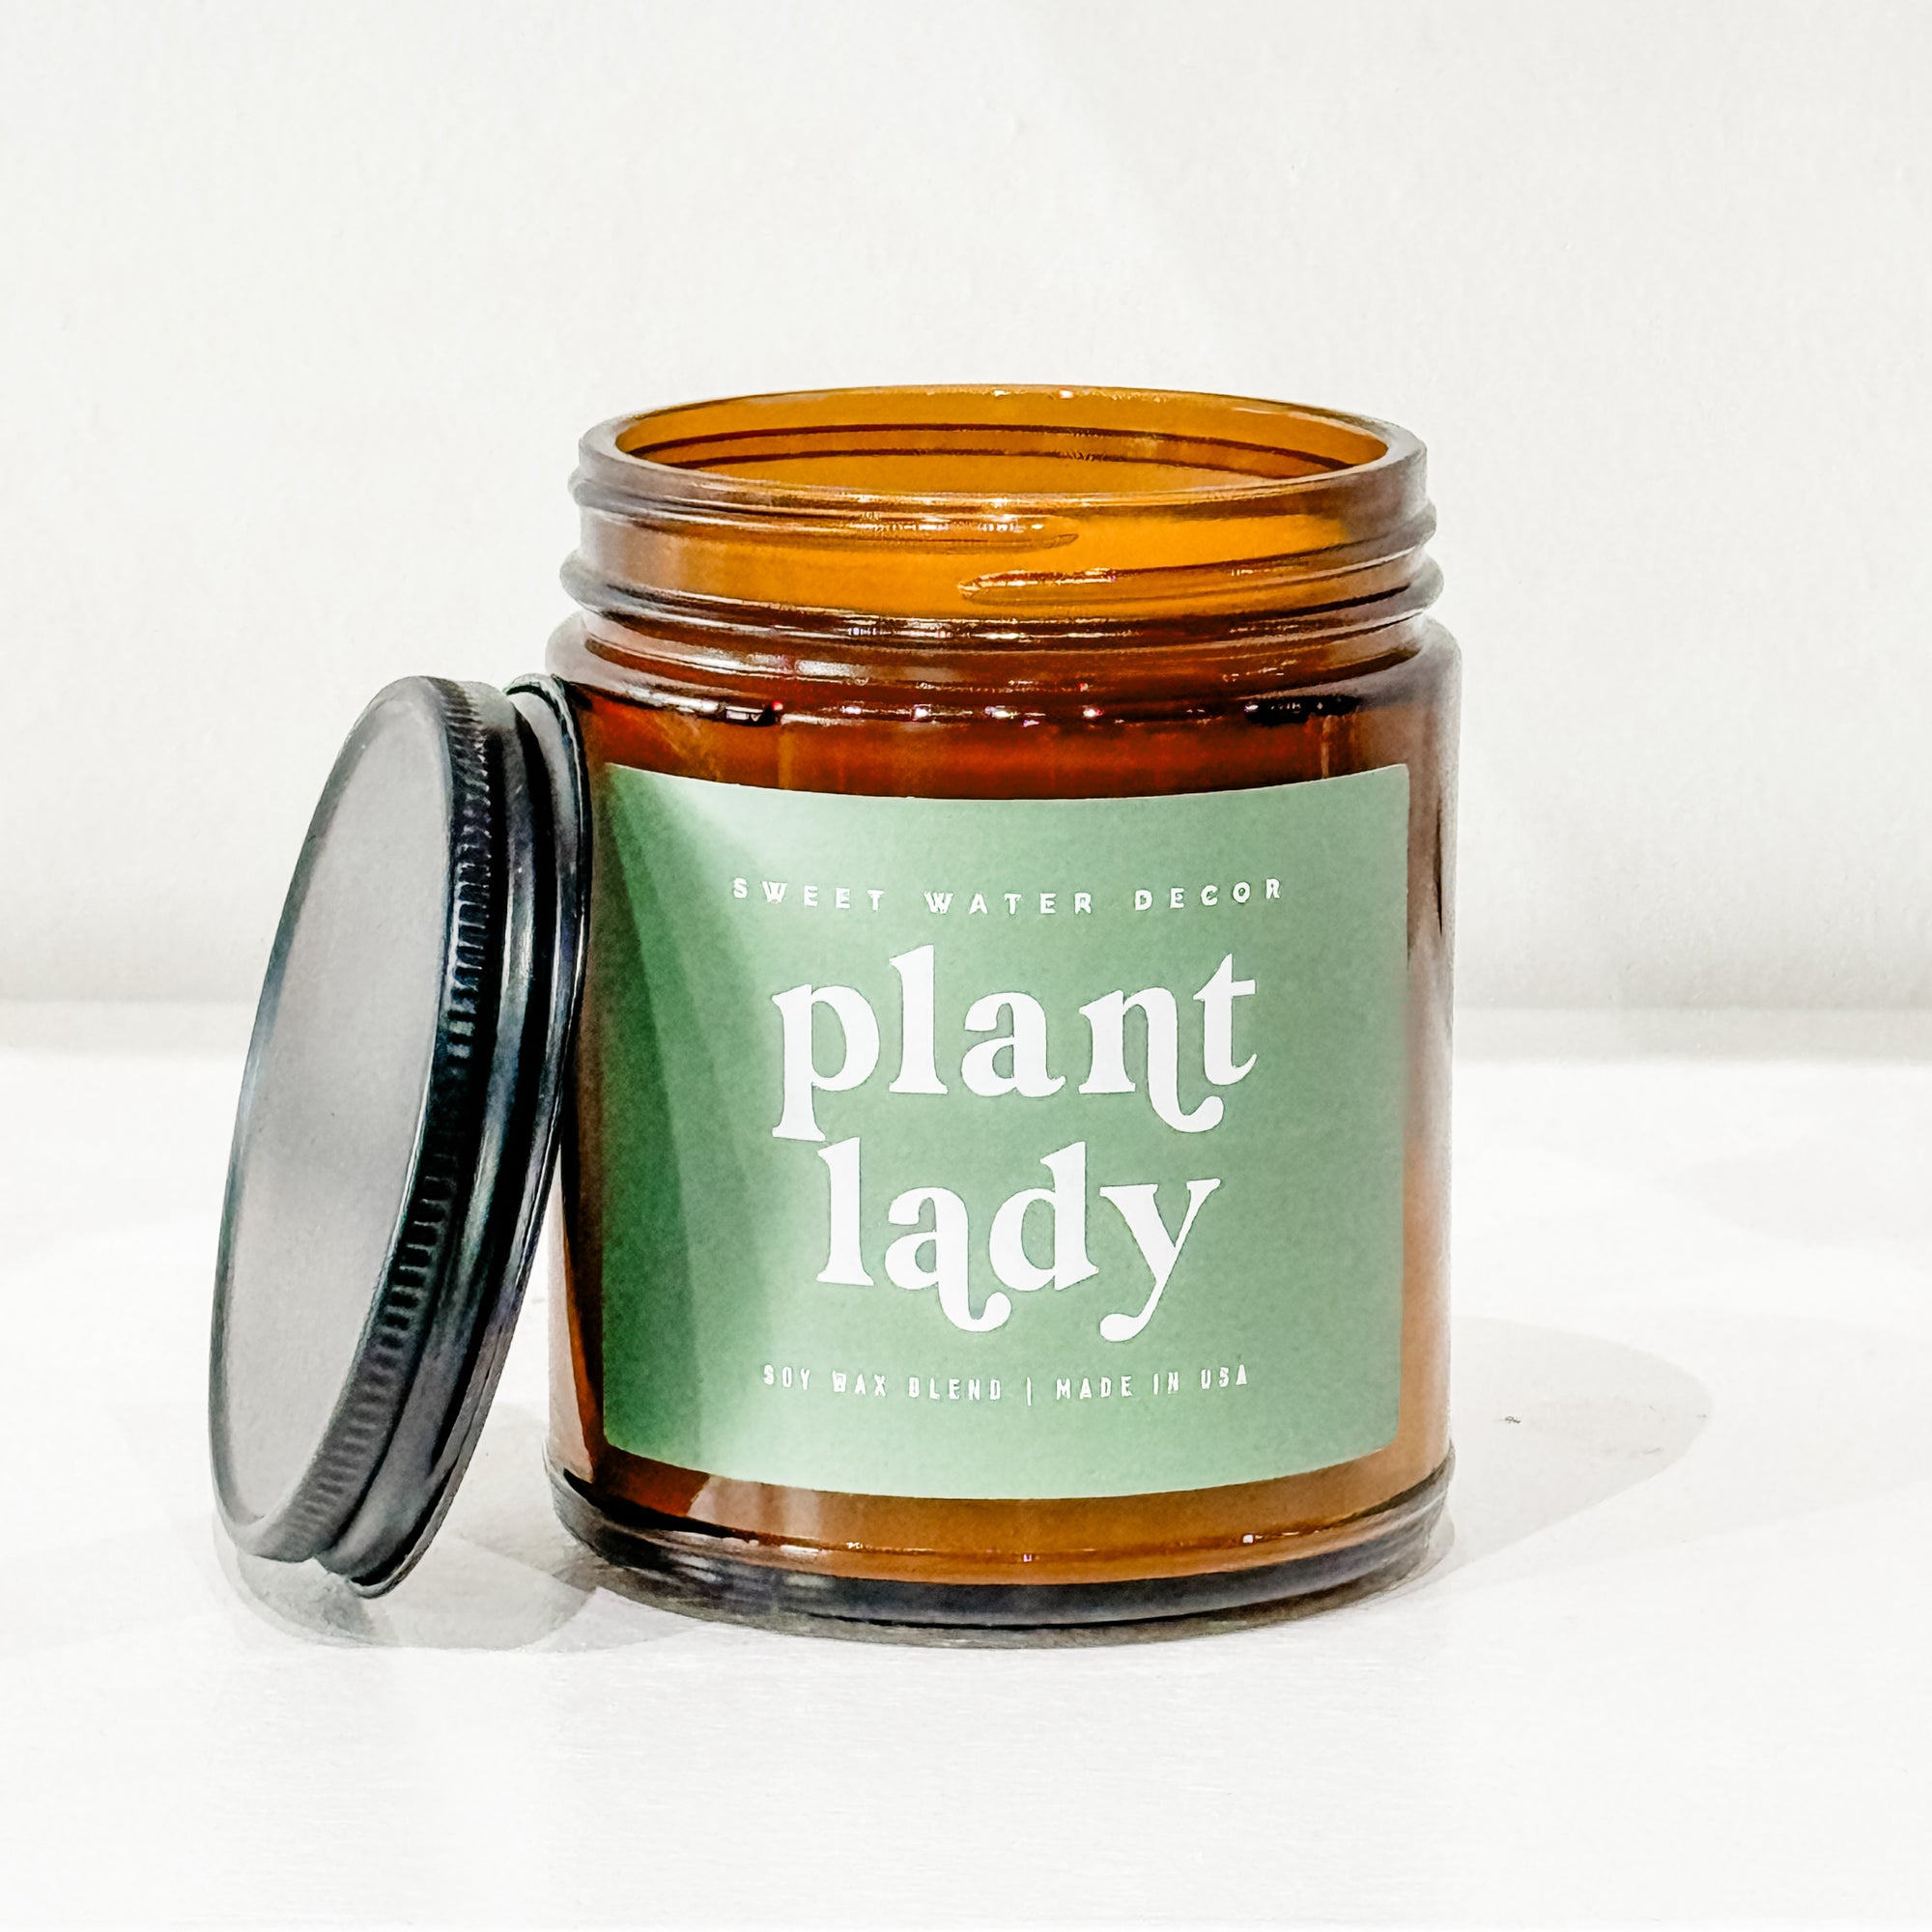 LIMITED EDITION Plant Lady 9 oz Soy Candle - Home Decor - Lemon & Lavender